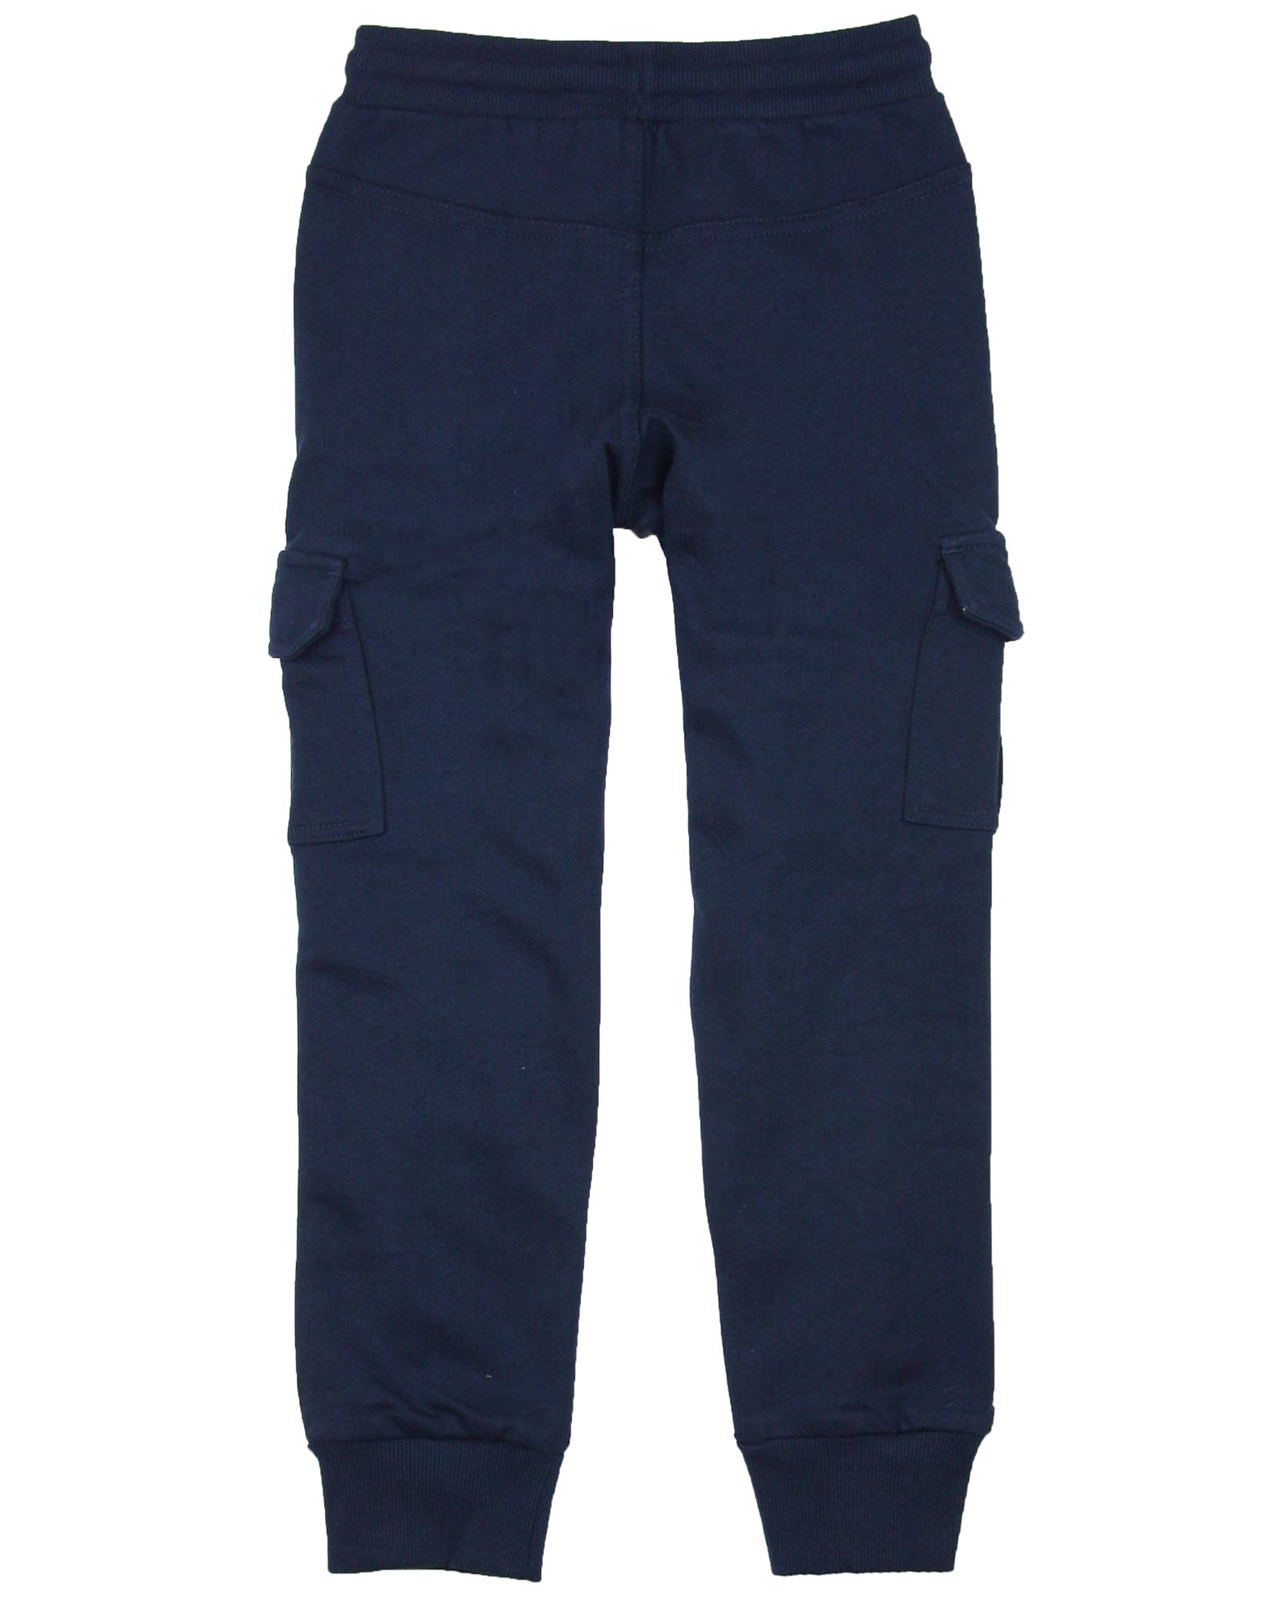 BOBOLI Boys Jogging Pants with Caro Pockets, Sizes 4-16 Fall/Winter ...